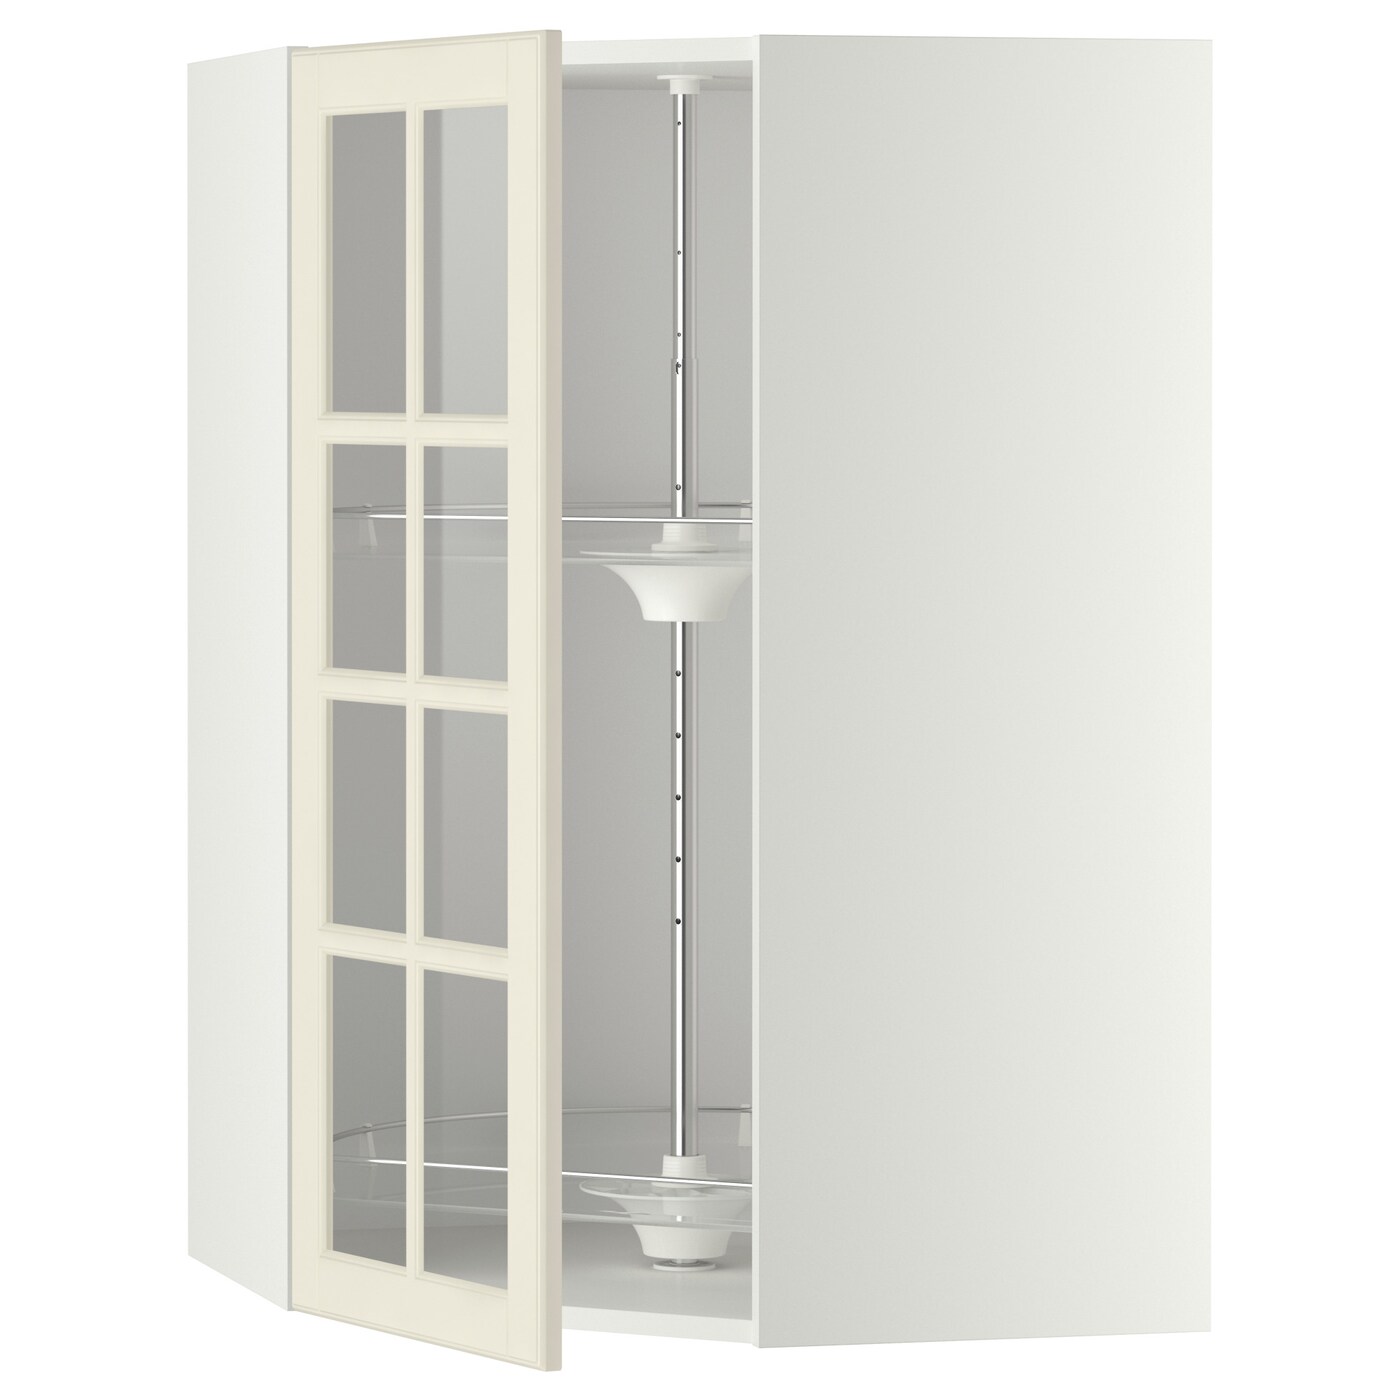 Полка с каруселью/дверца стекло -  METOD  IKEA/  МЕТОД ИКЕА, 100х68 см, белый/бежевый